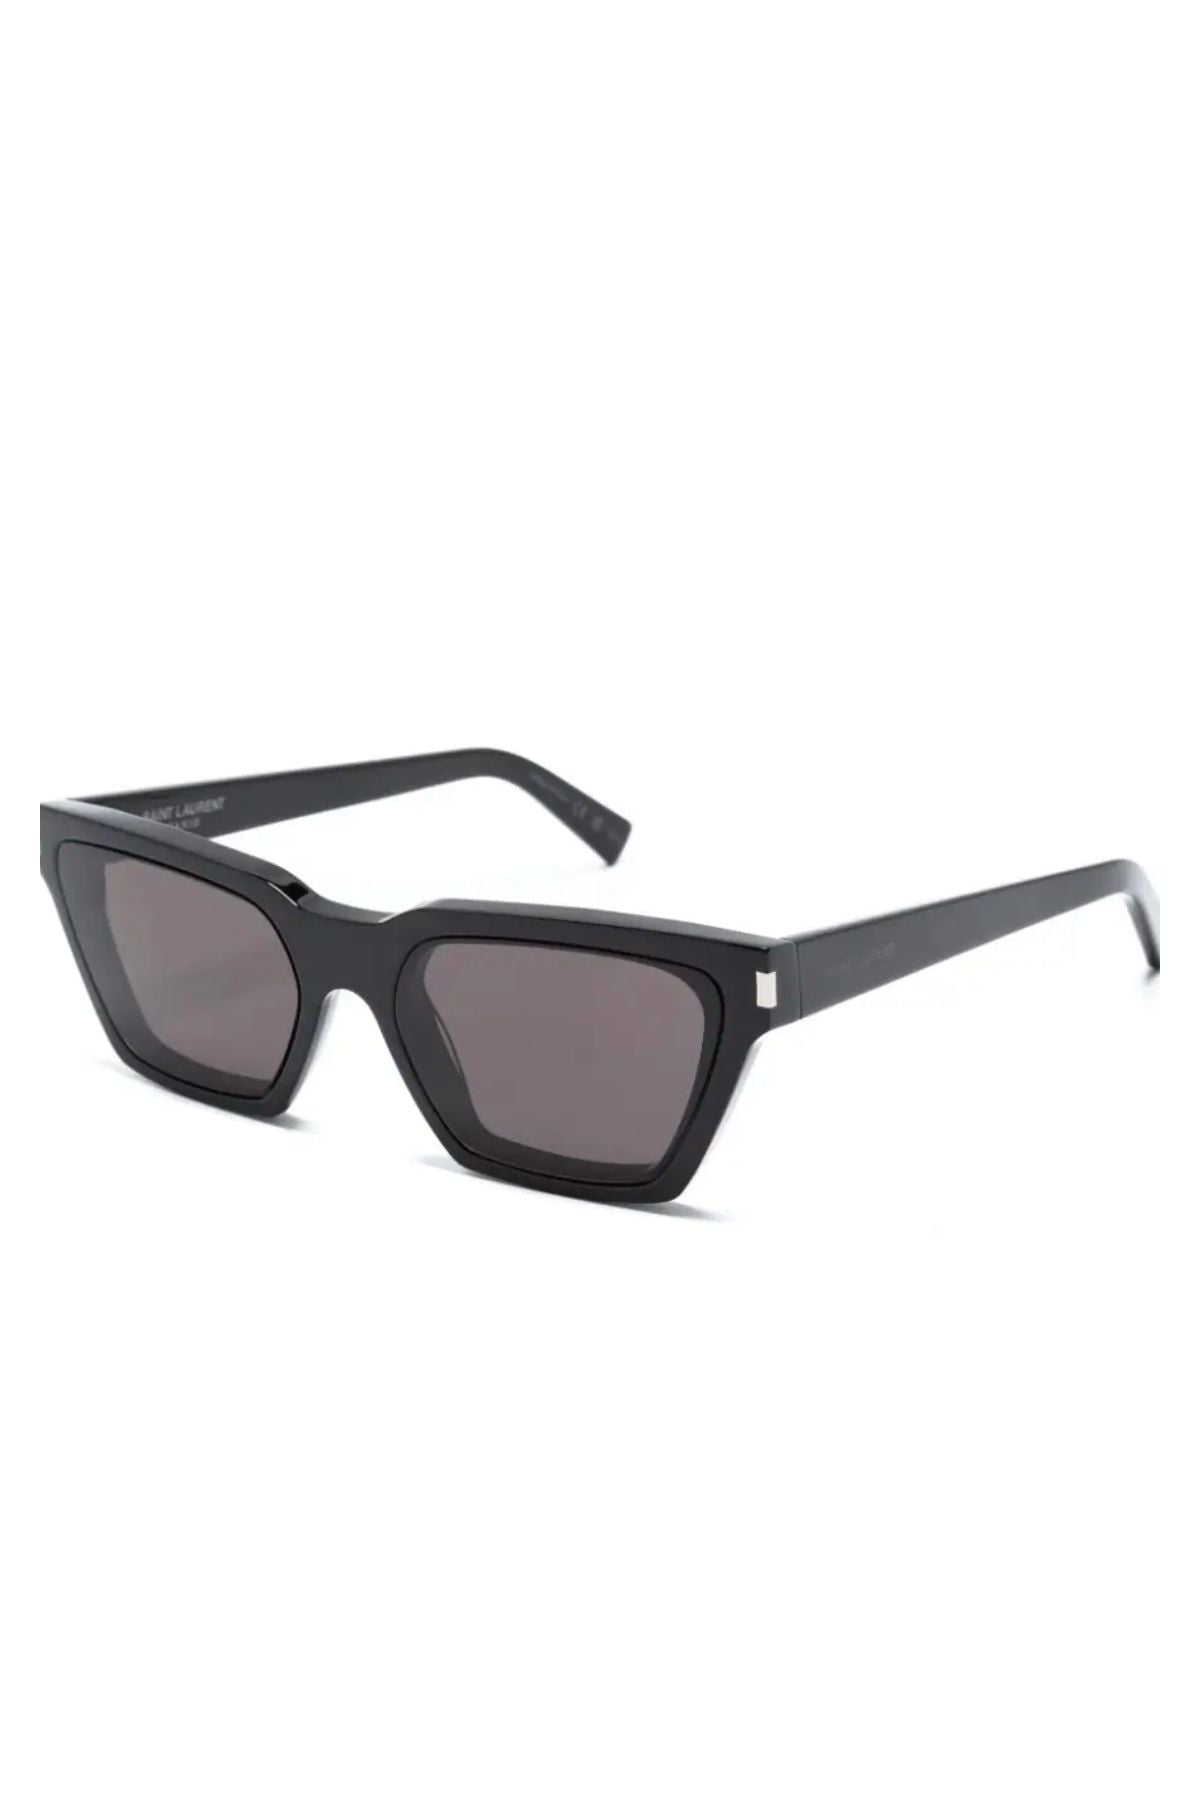 Saint Laurent Calista Sunglasses - Black